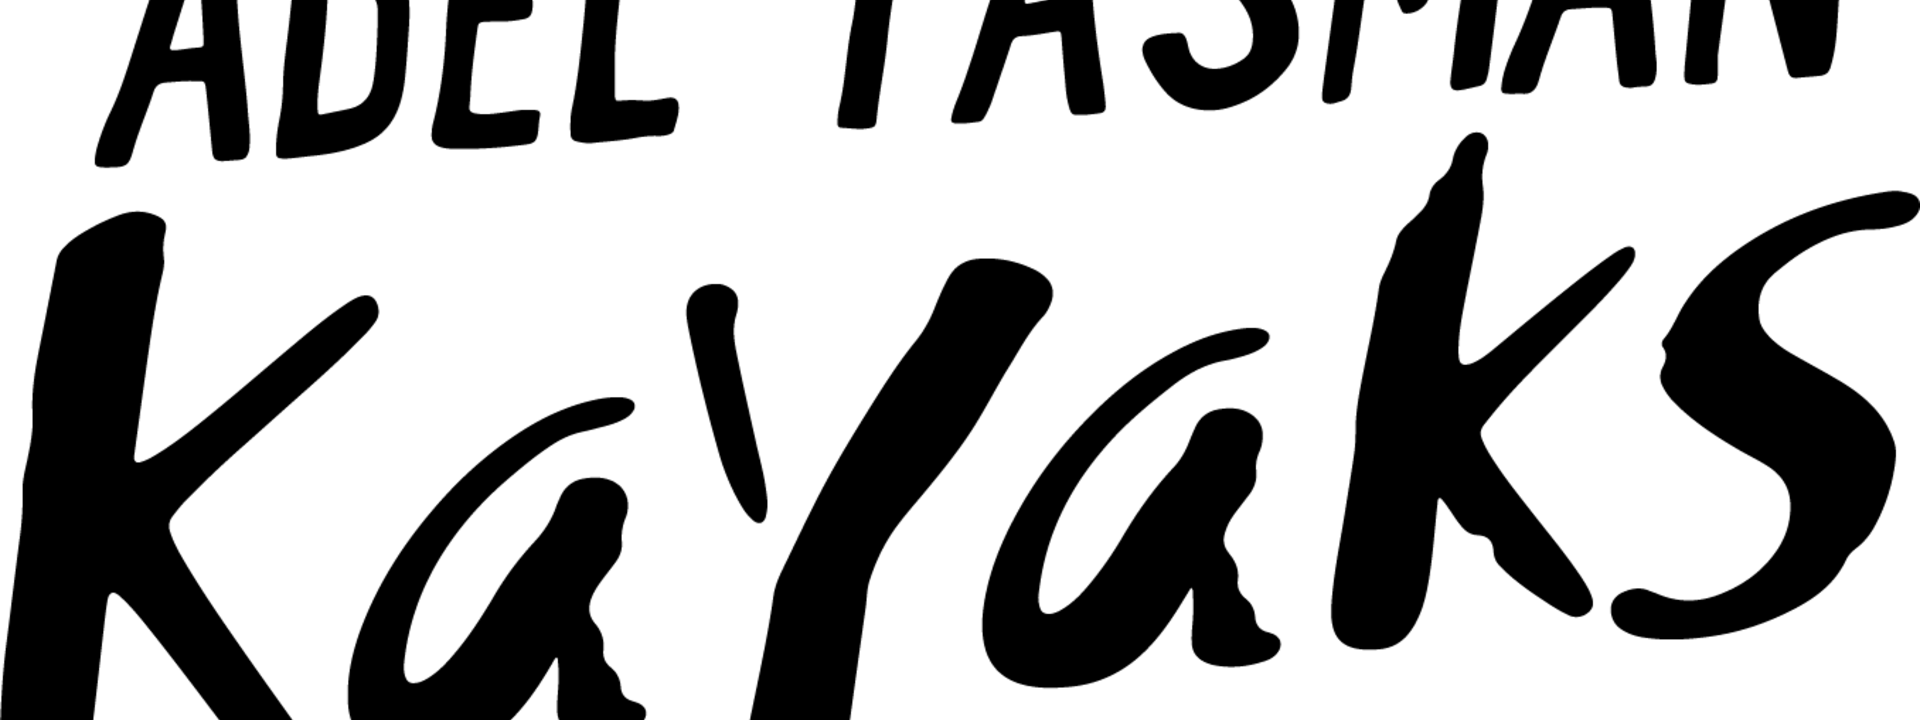 able-tasman-logo-black.png